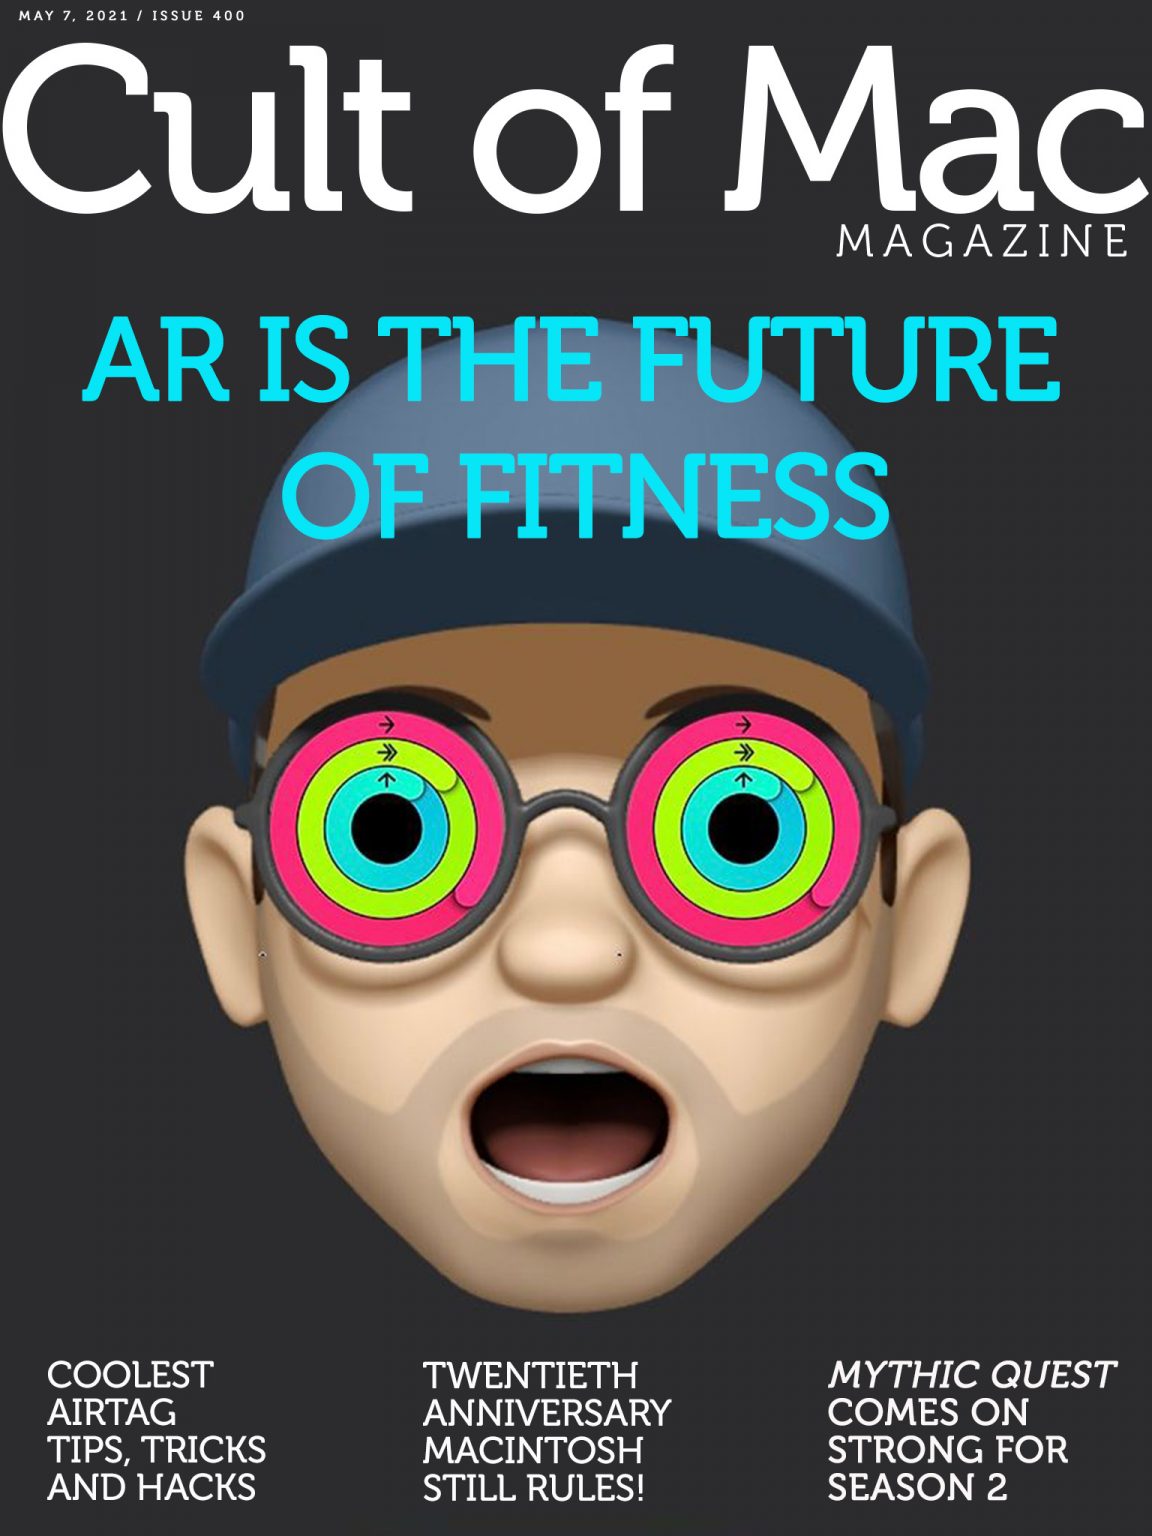 Apple AR glasses will turbocharge fitness.